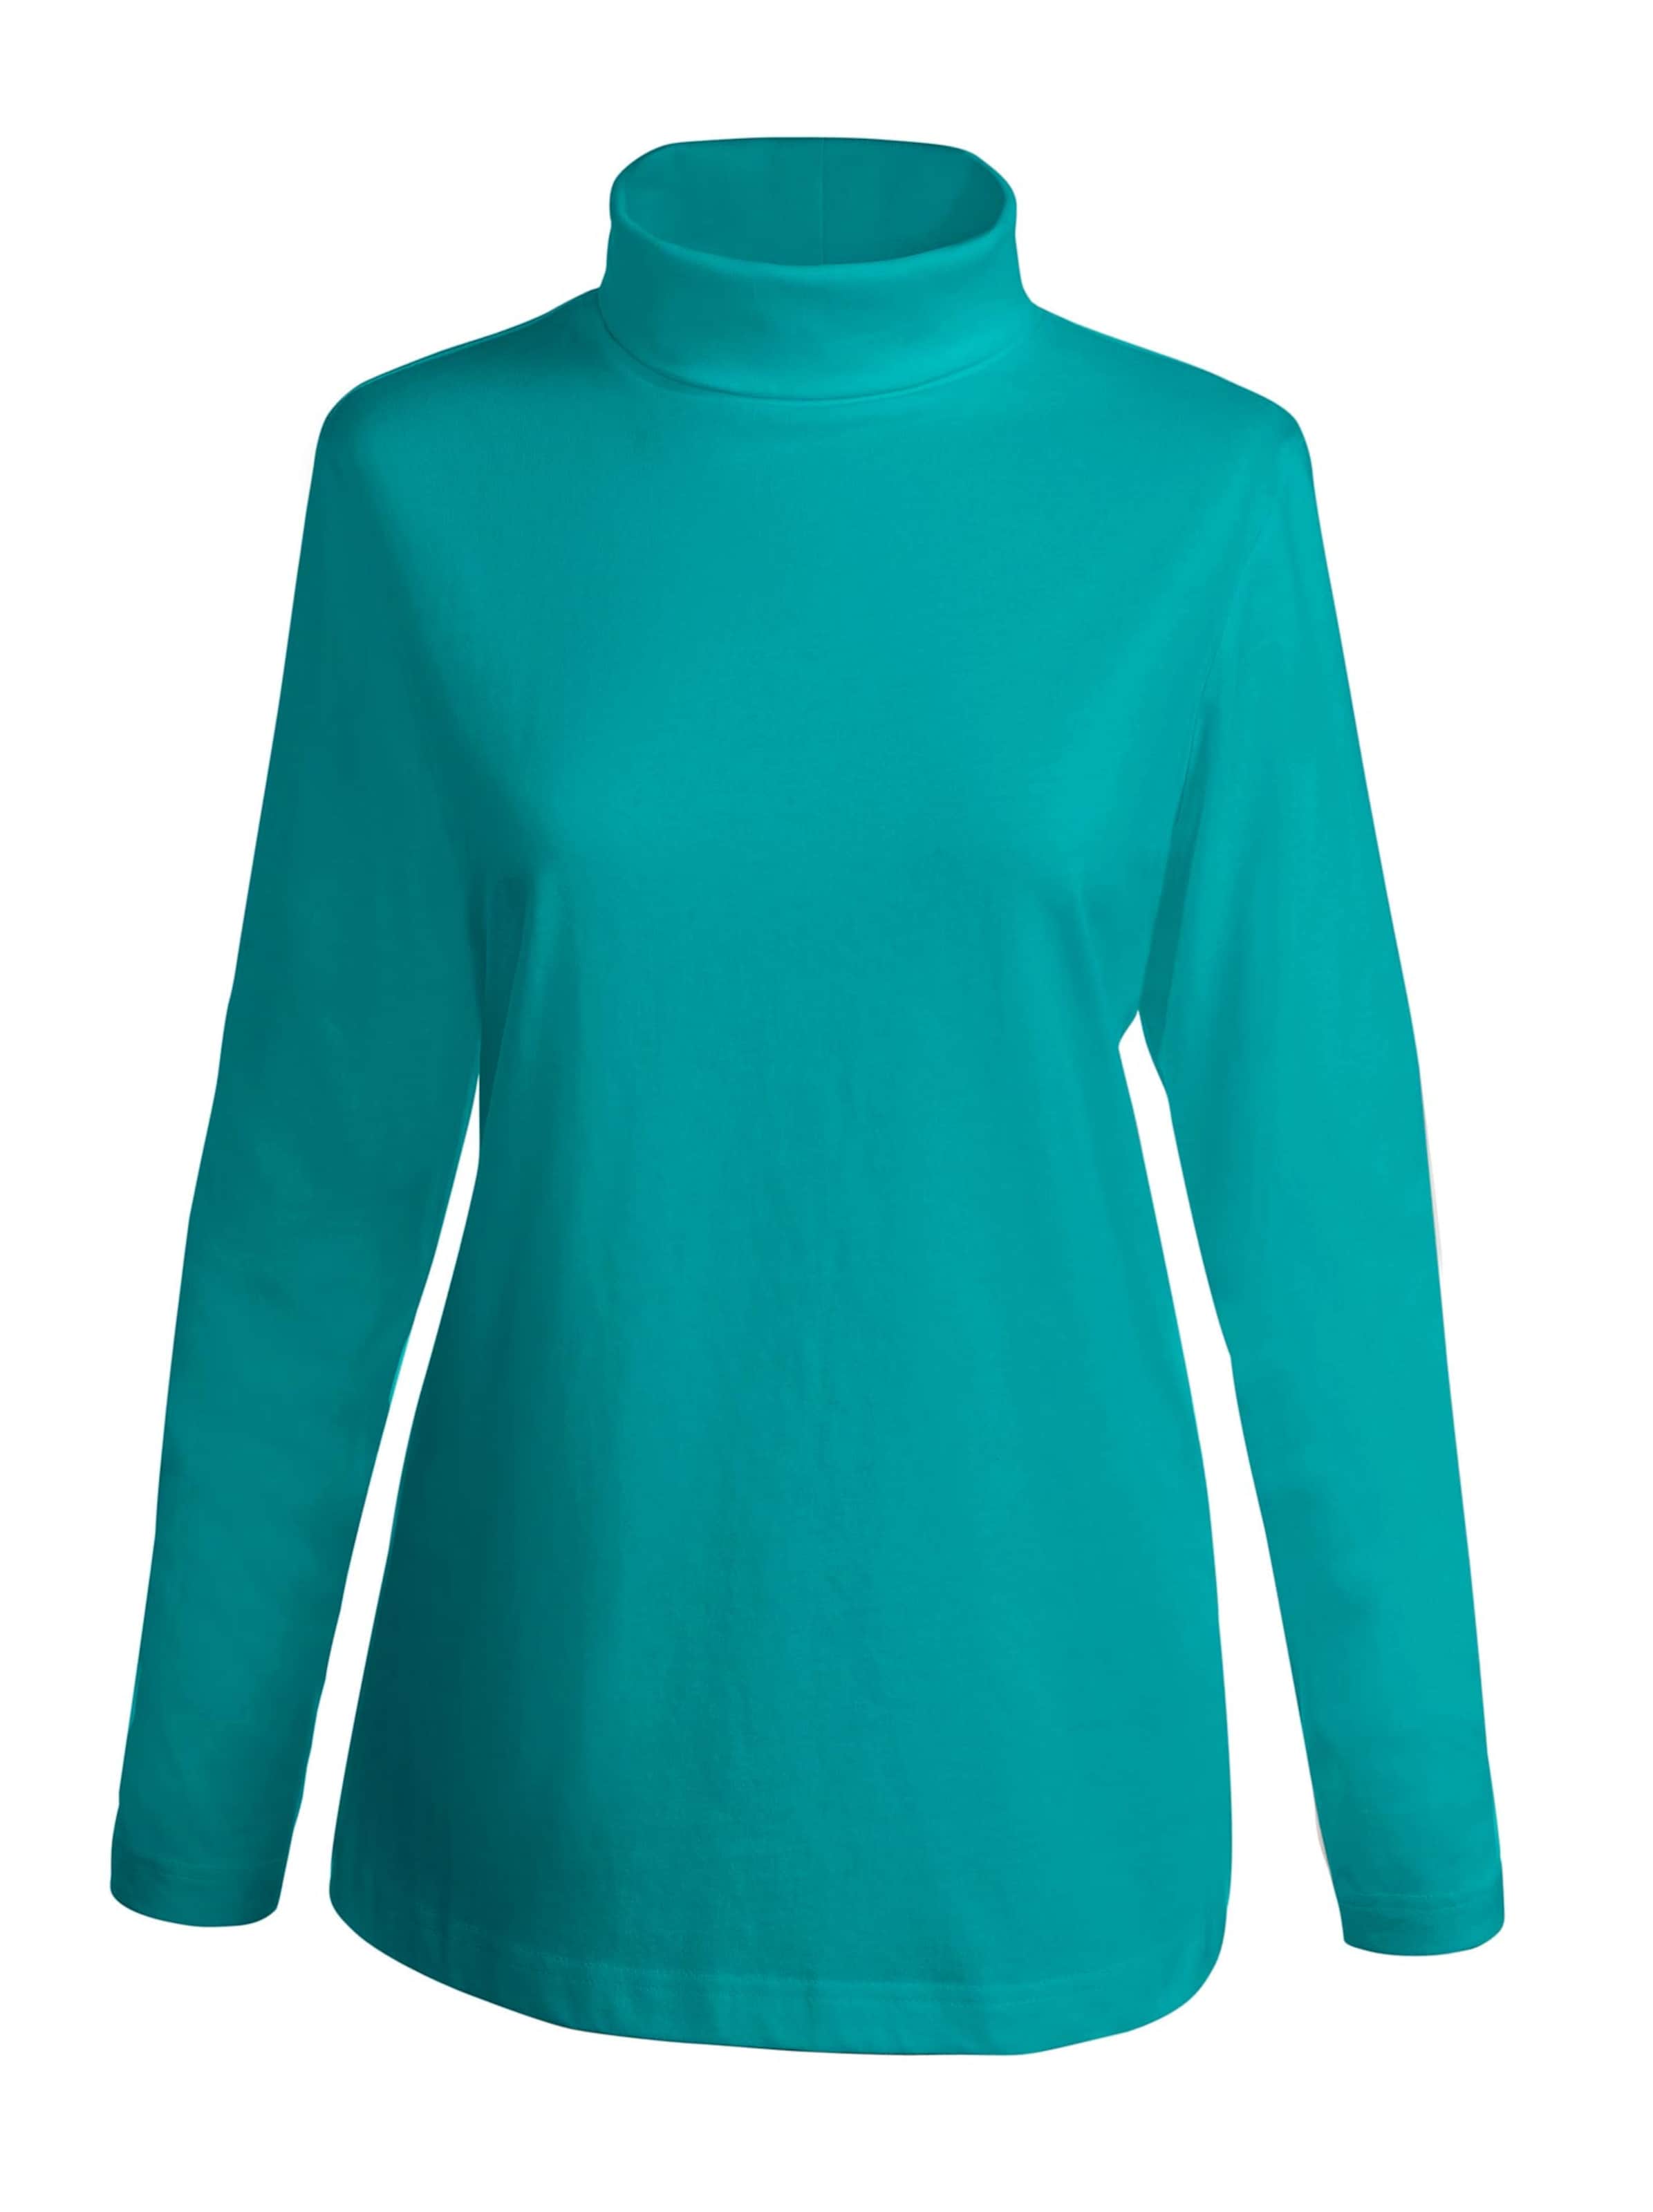 Damenmode Shirts Rollkragenshirt in smaragdgrün 